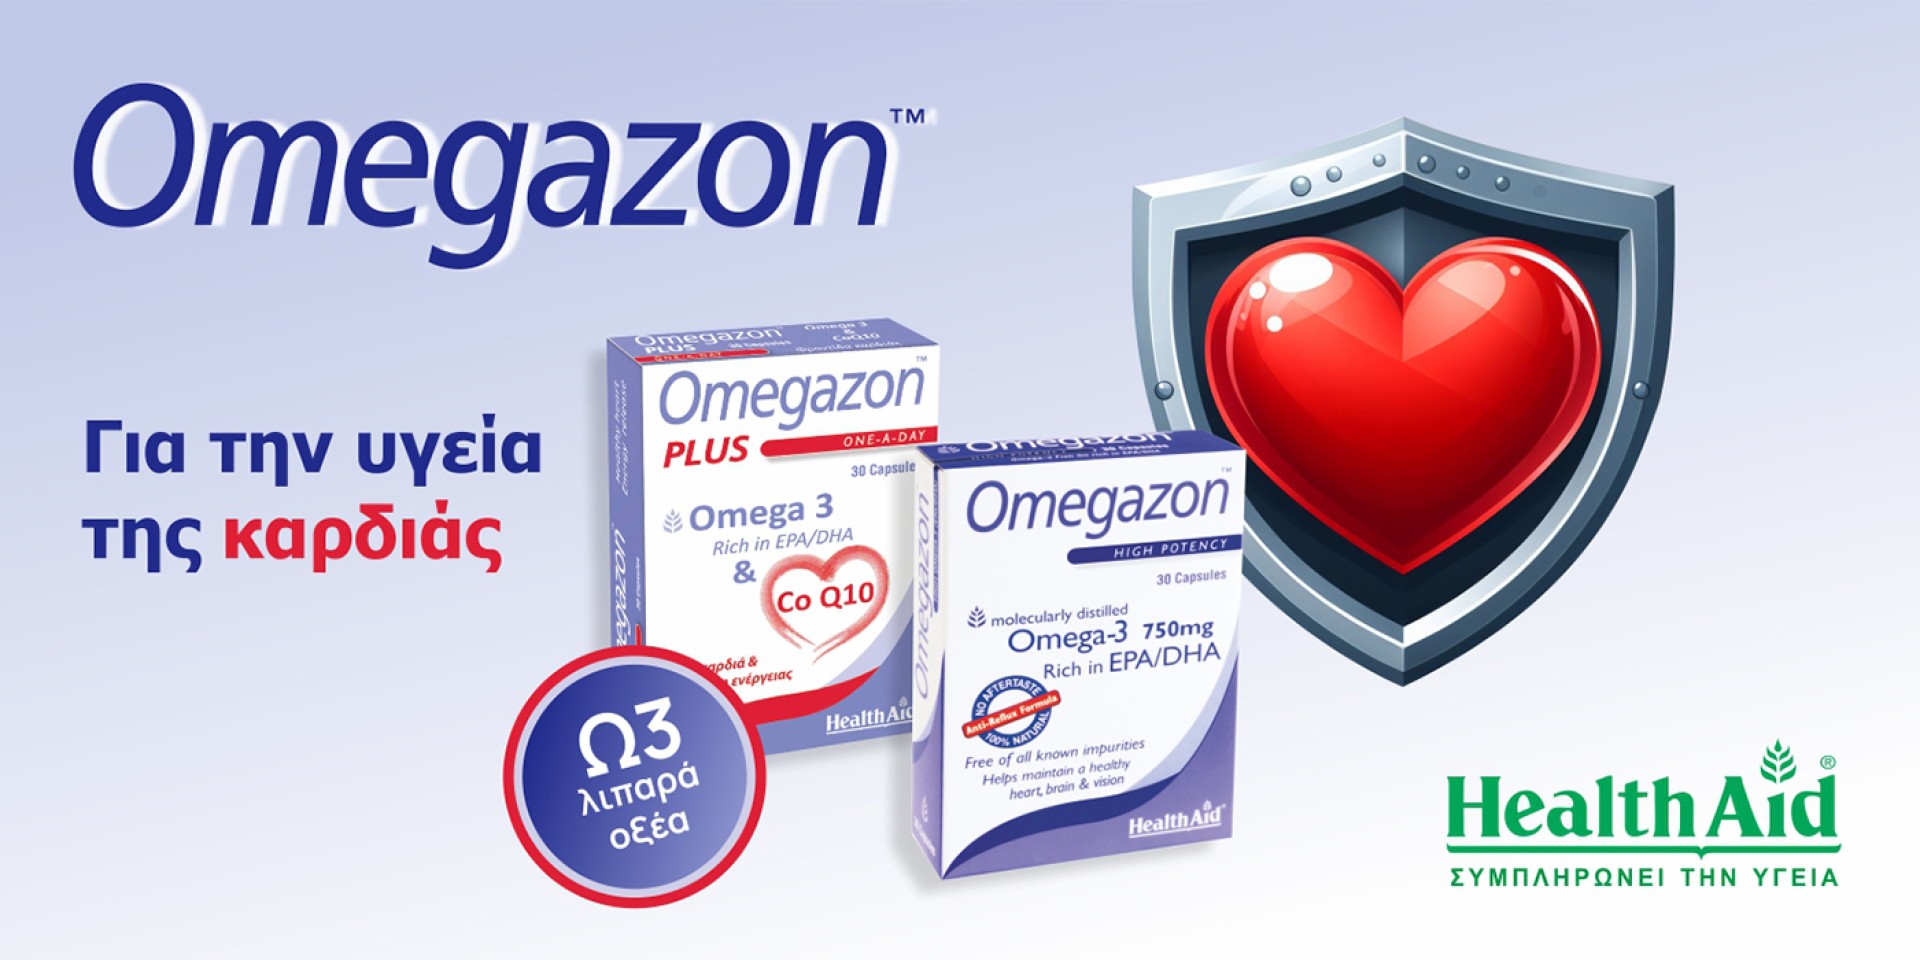 Omegazon, για την διατήρηση υγιούς καρδιάς και κυκλοφορικού συστήματος!